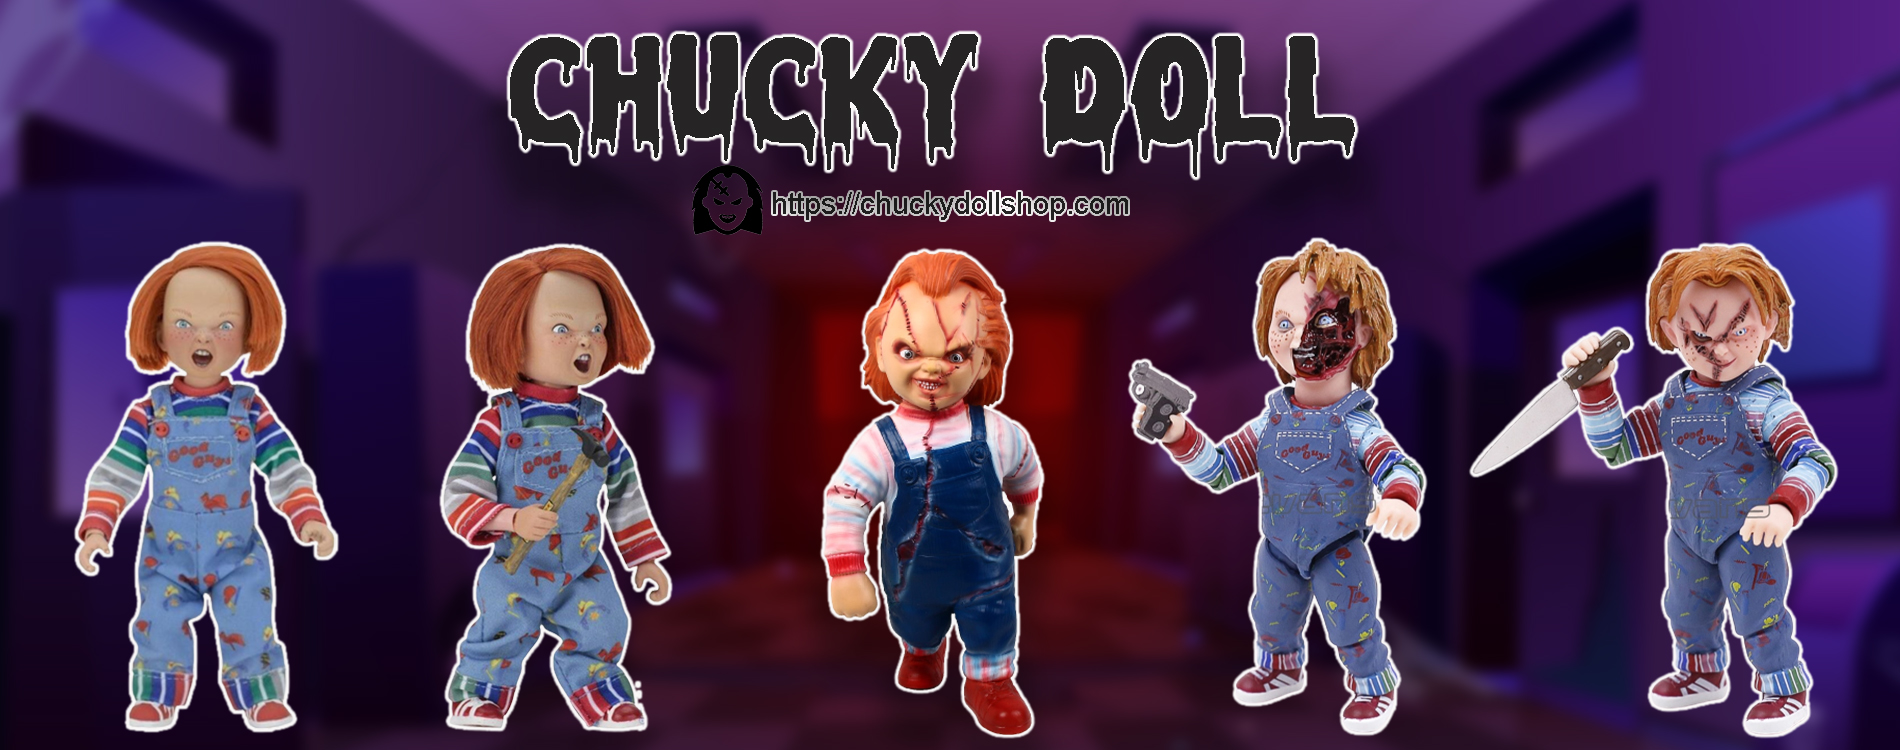 chucky-doll-banner